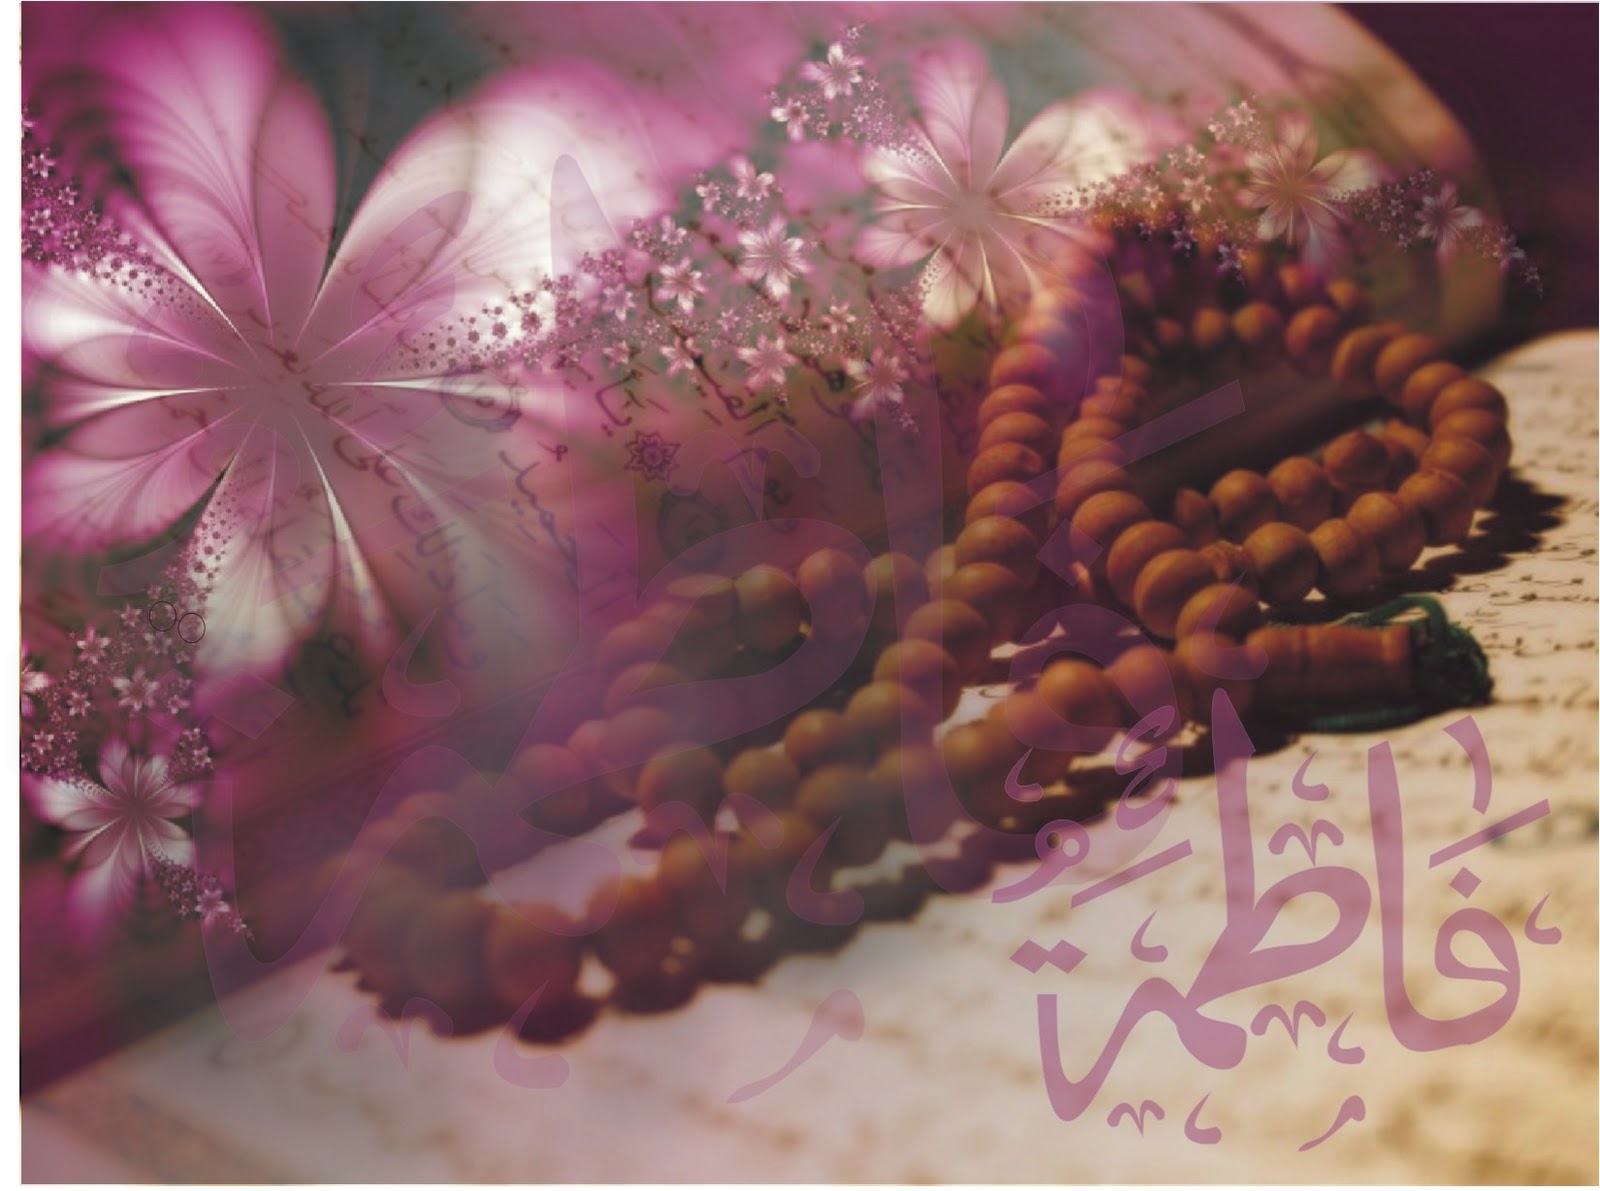 Gambar al quran cantik untuk wallpaper